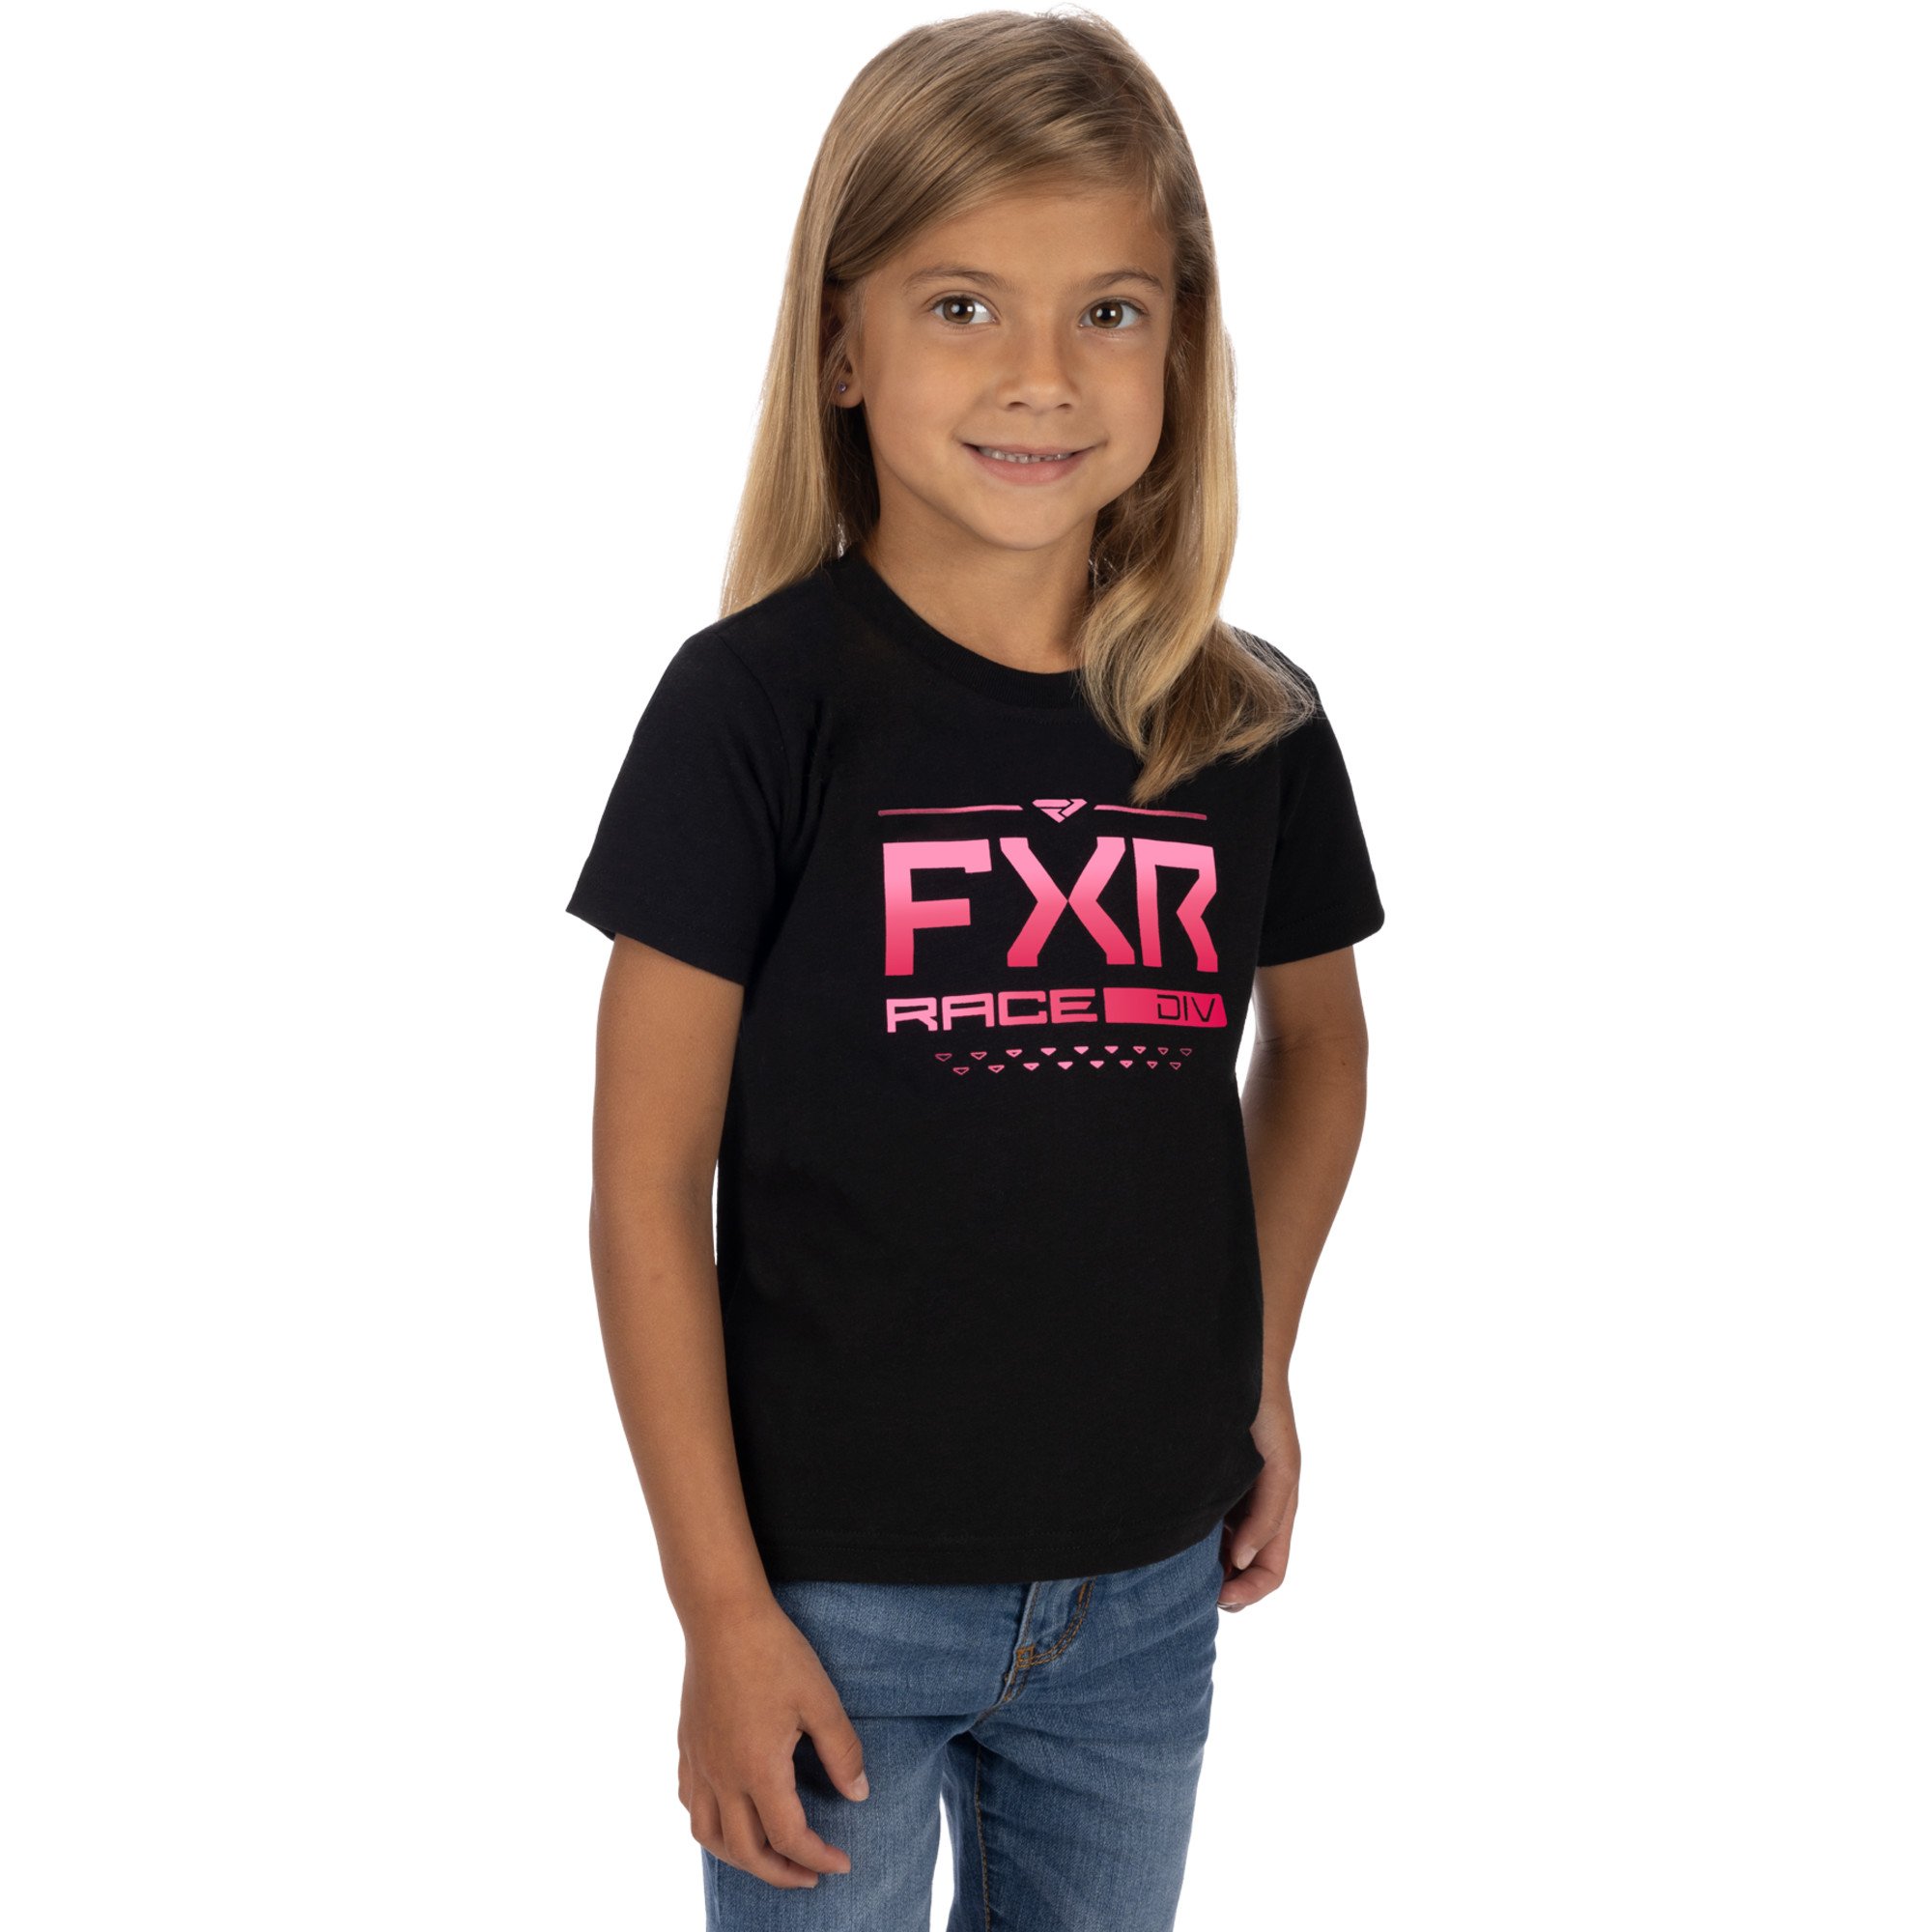 fxr racing t-shirt shirts for kids toddler race division premium